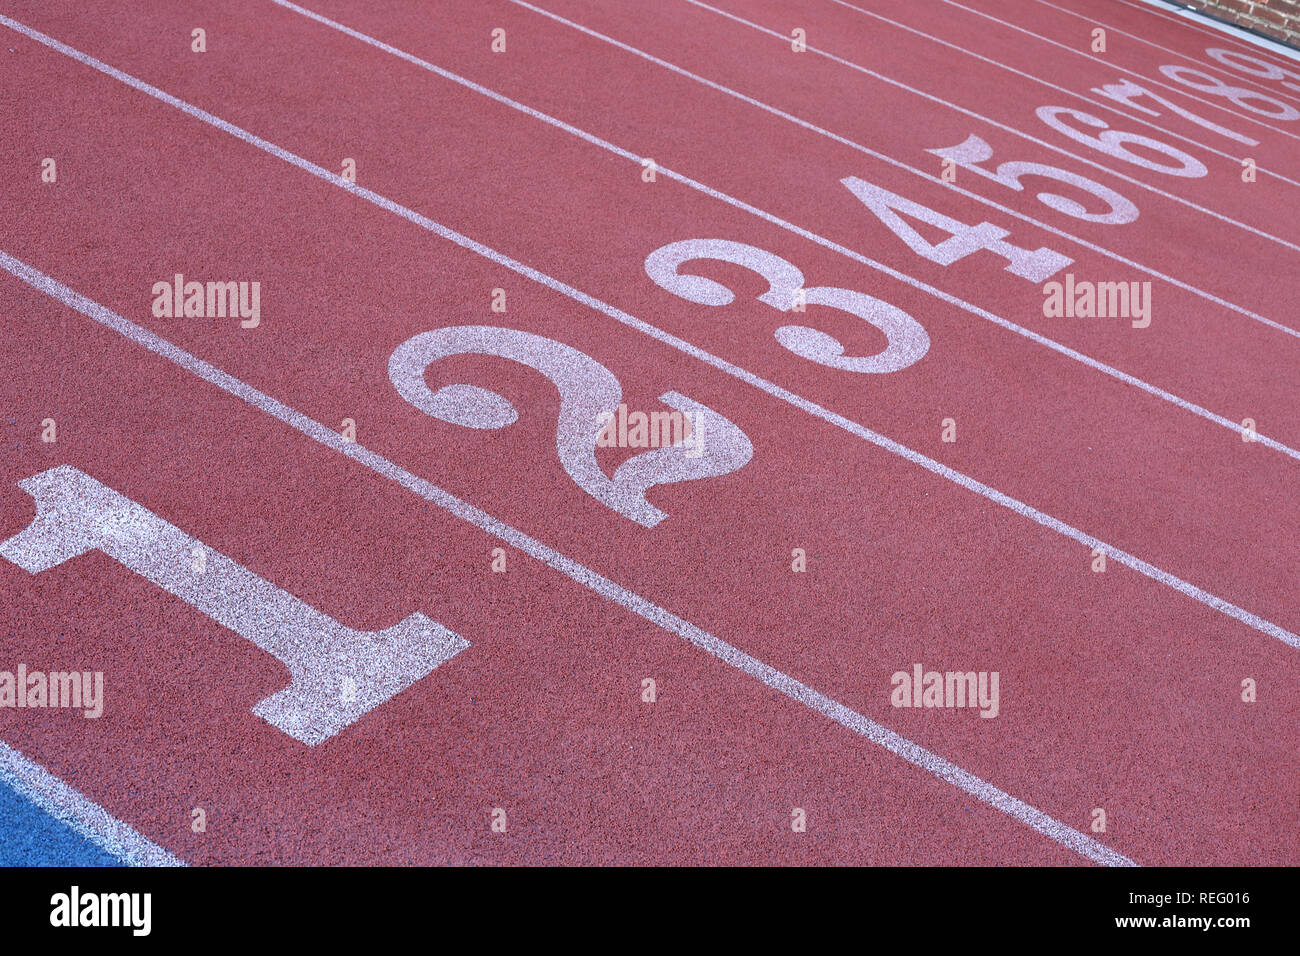 Leichtathletik Rennstrecke Lanes Stockfoto